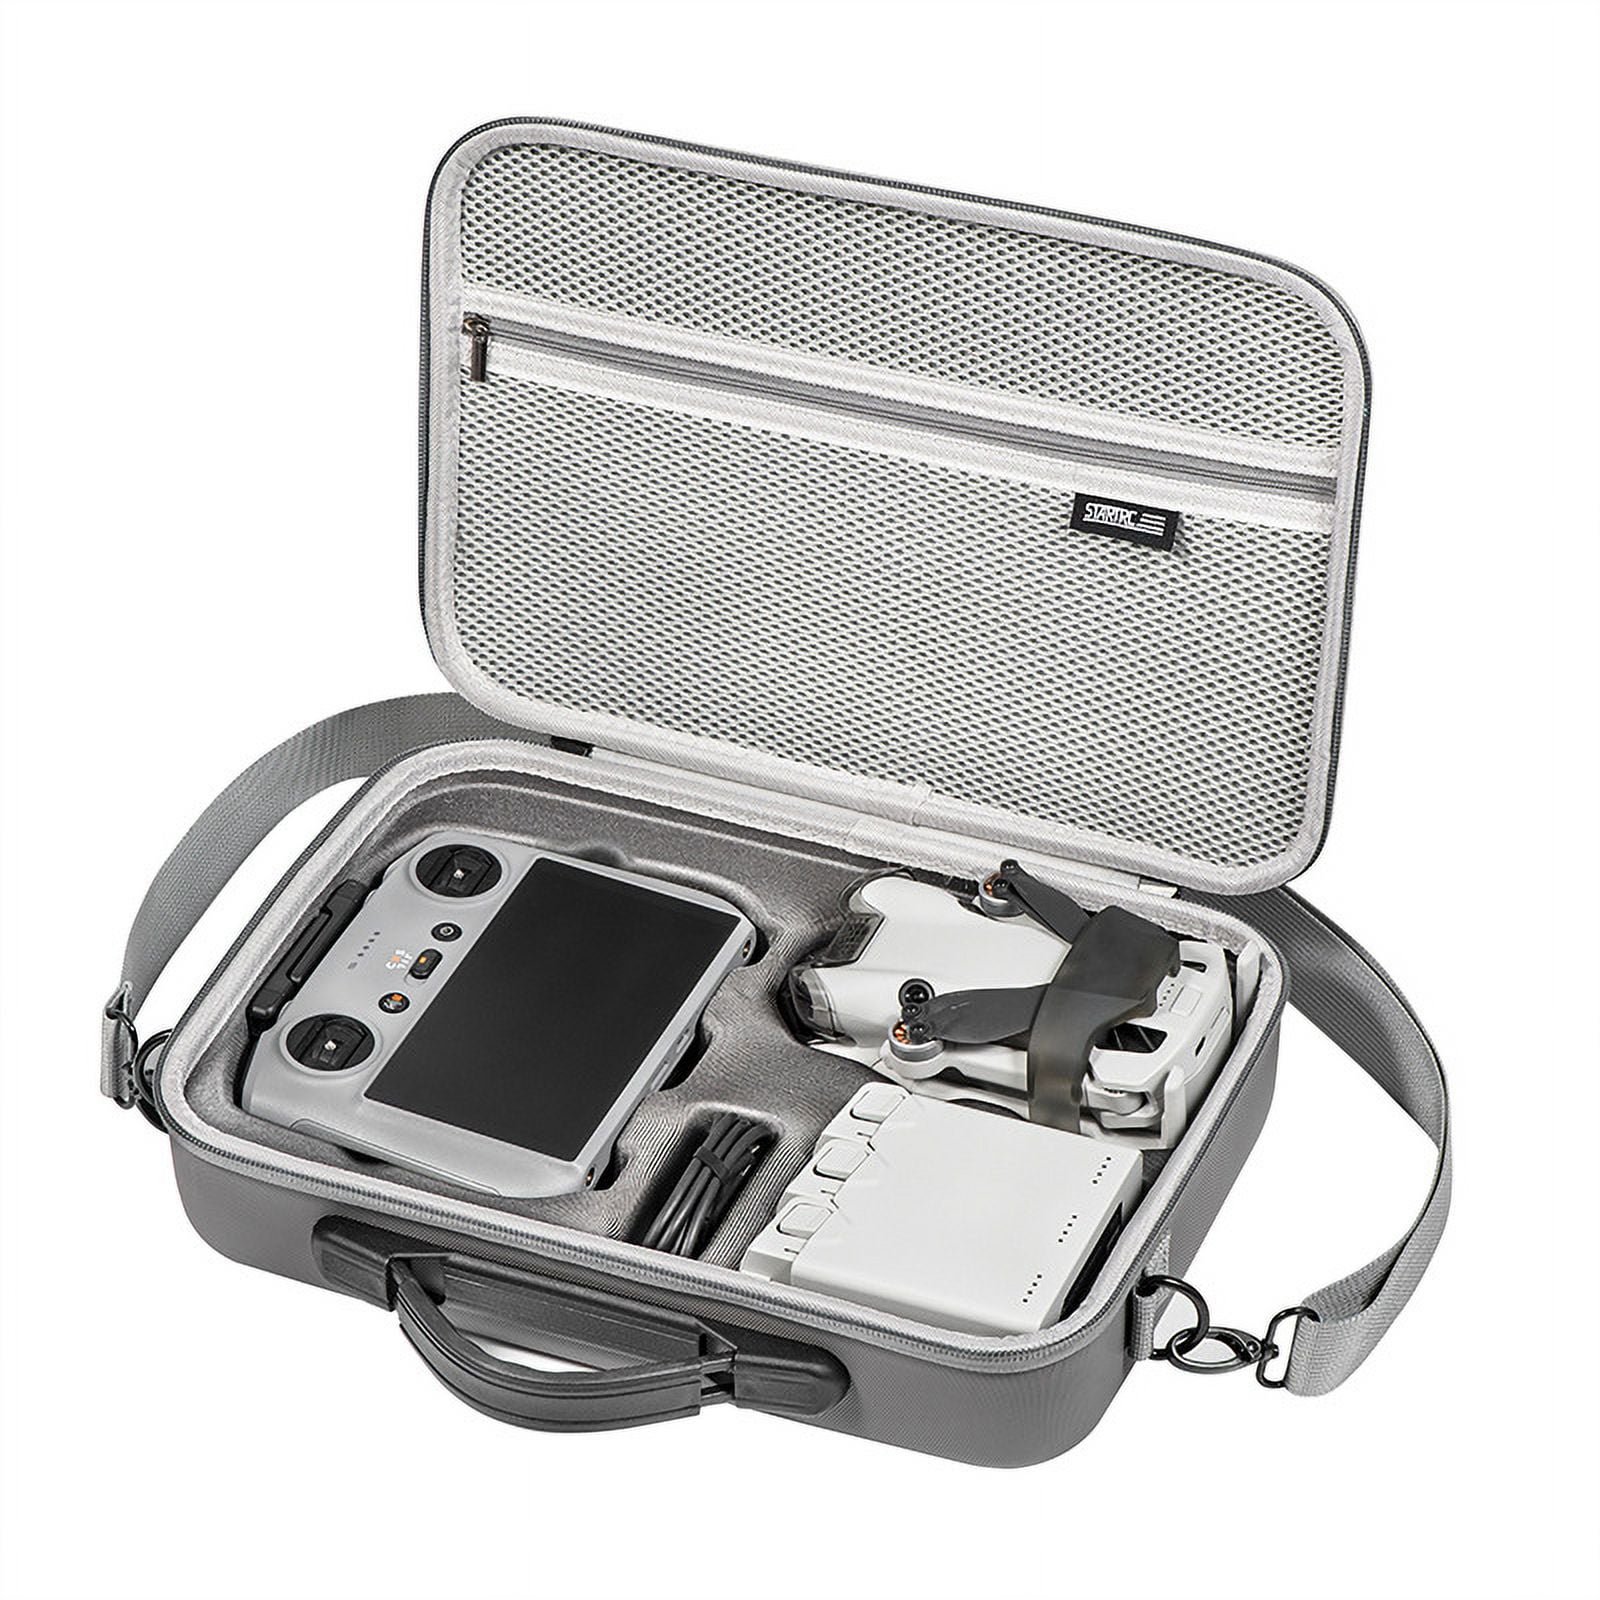 GAEKOL Carrying Case for DJI Mini 4 Pro Accessories,Portable